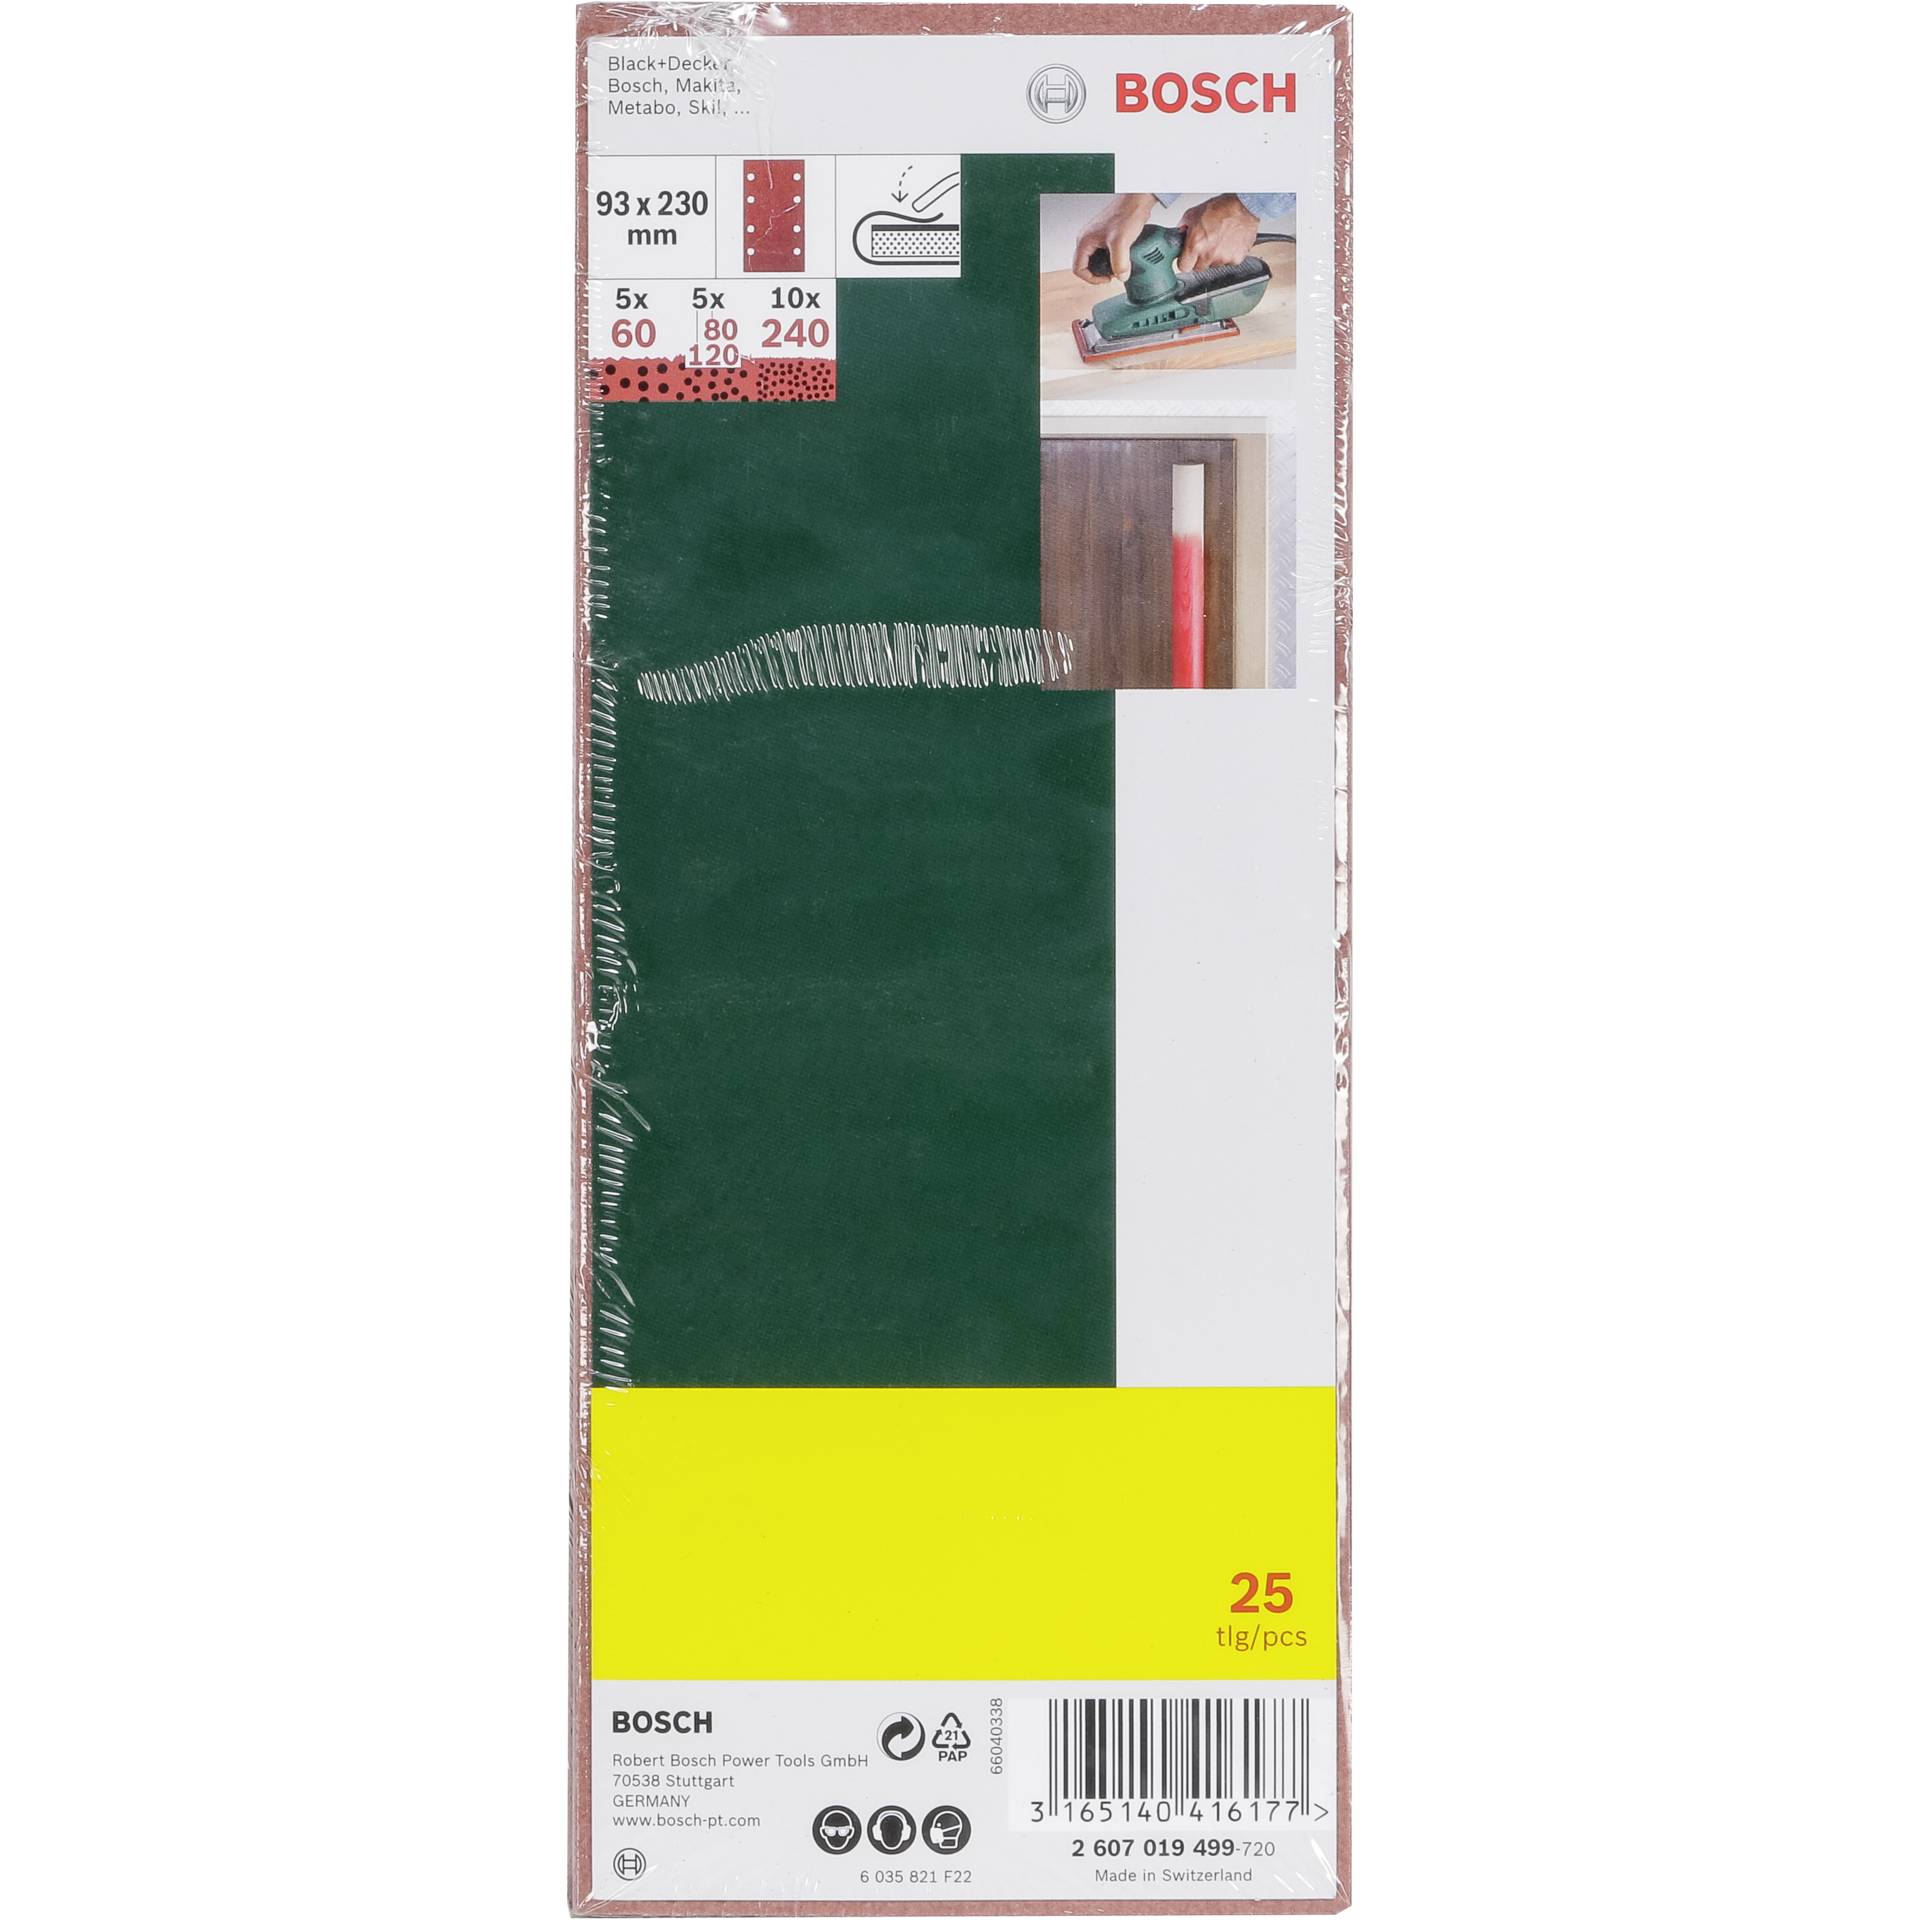 Bosch 25 Fogli abrasivi 93x230 8 fori grana  60-240